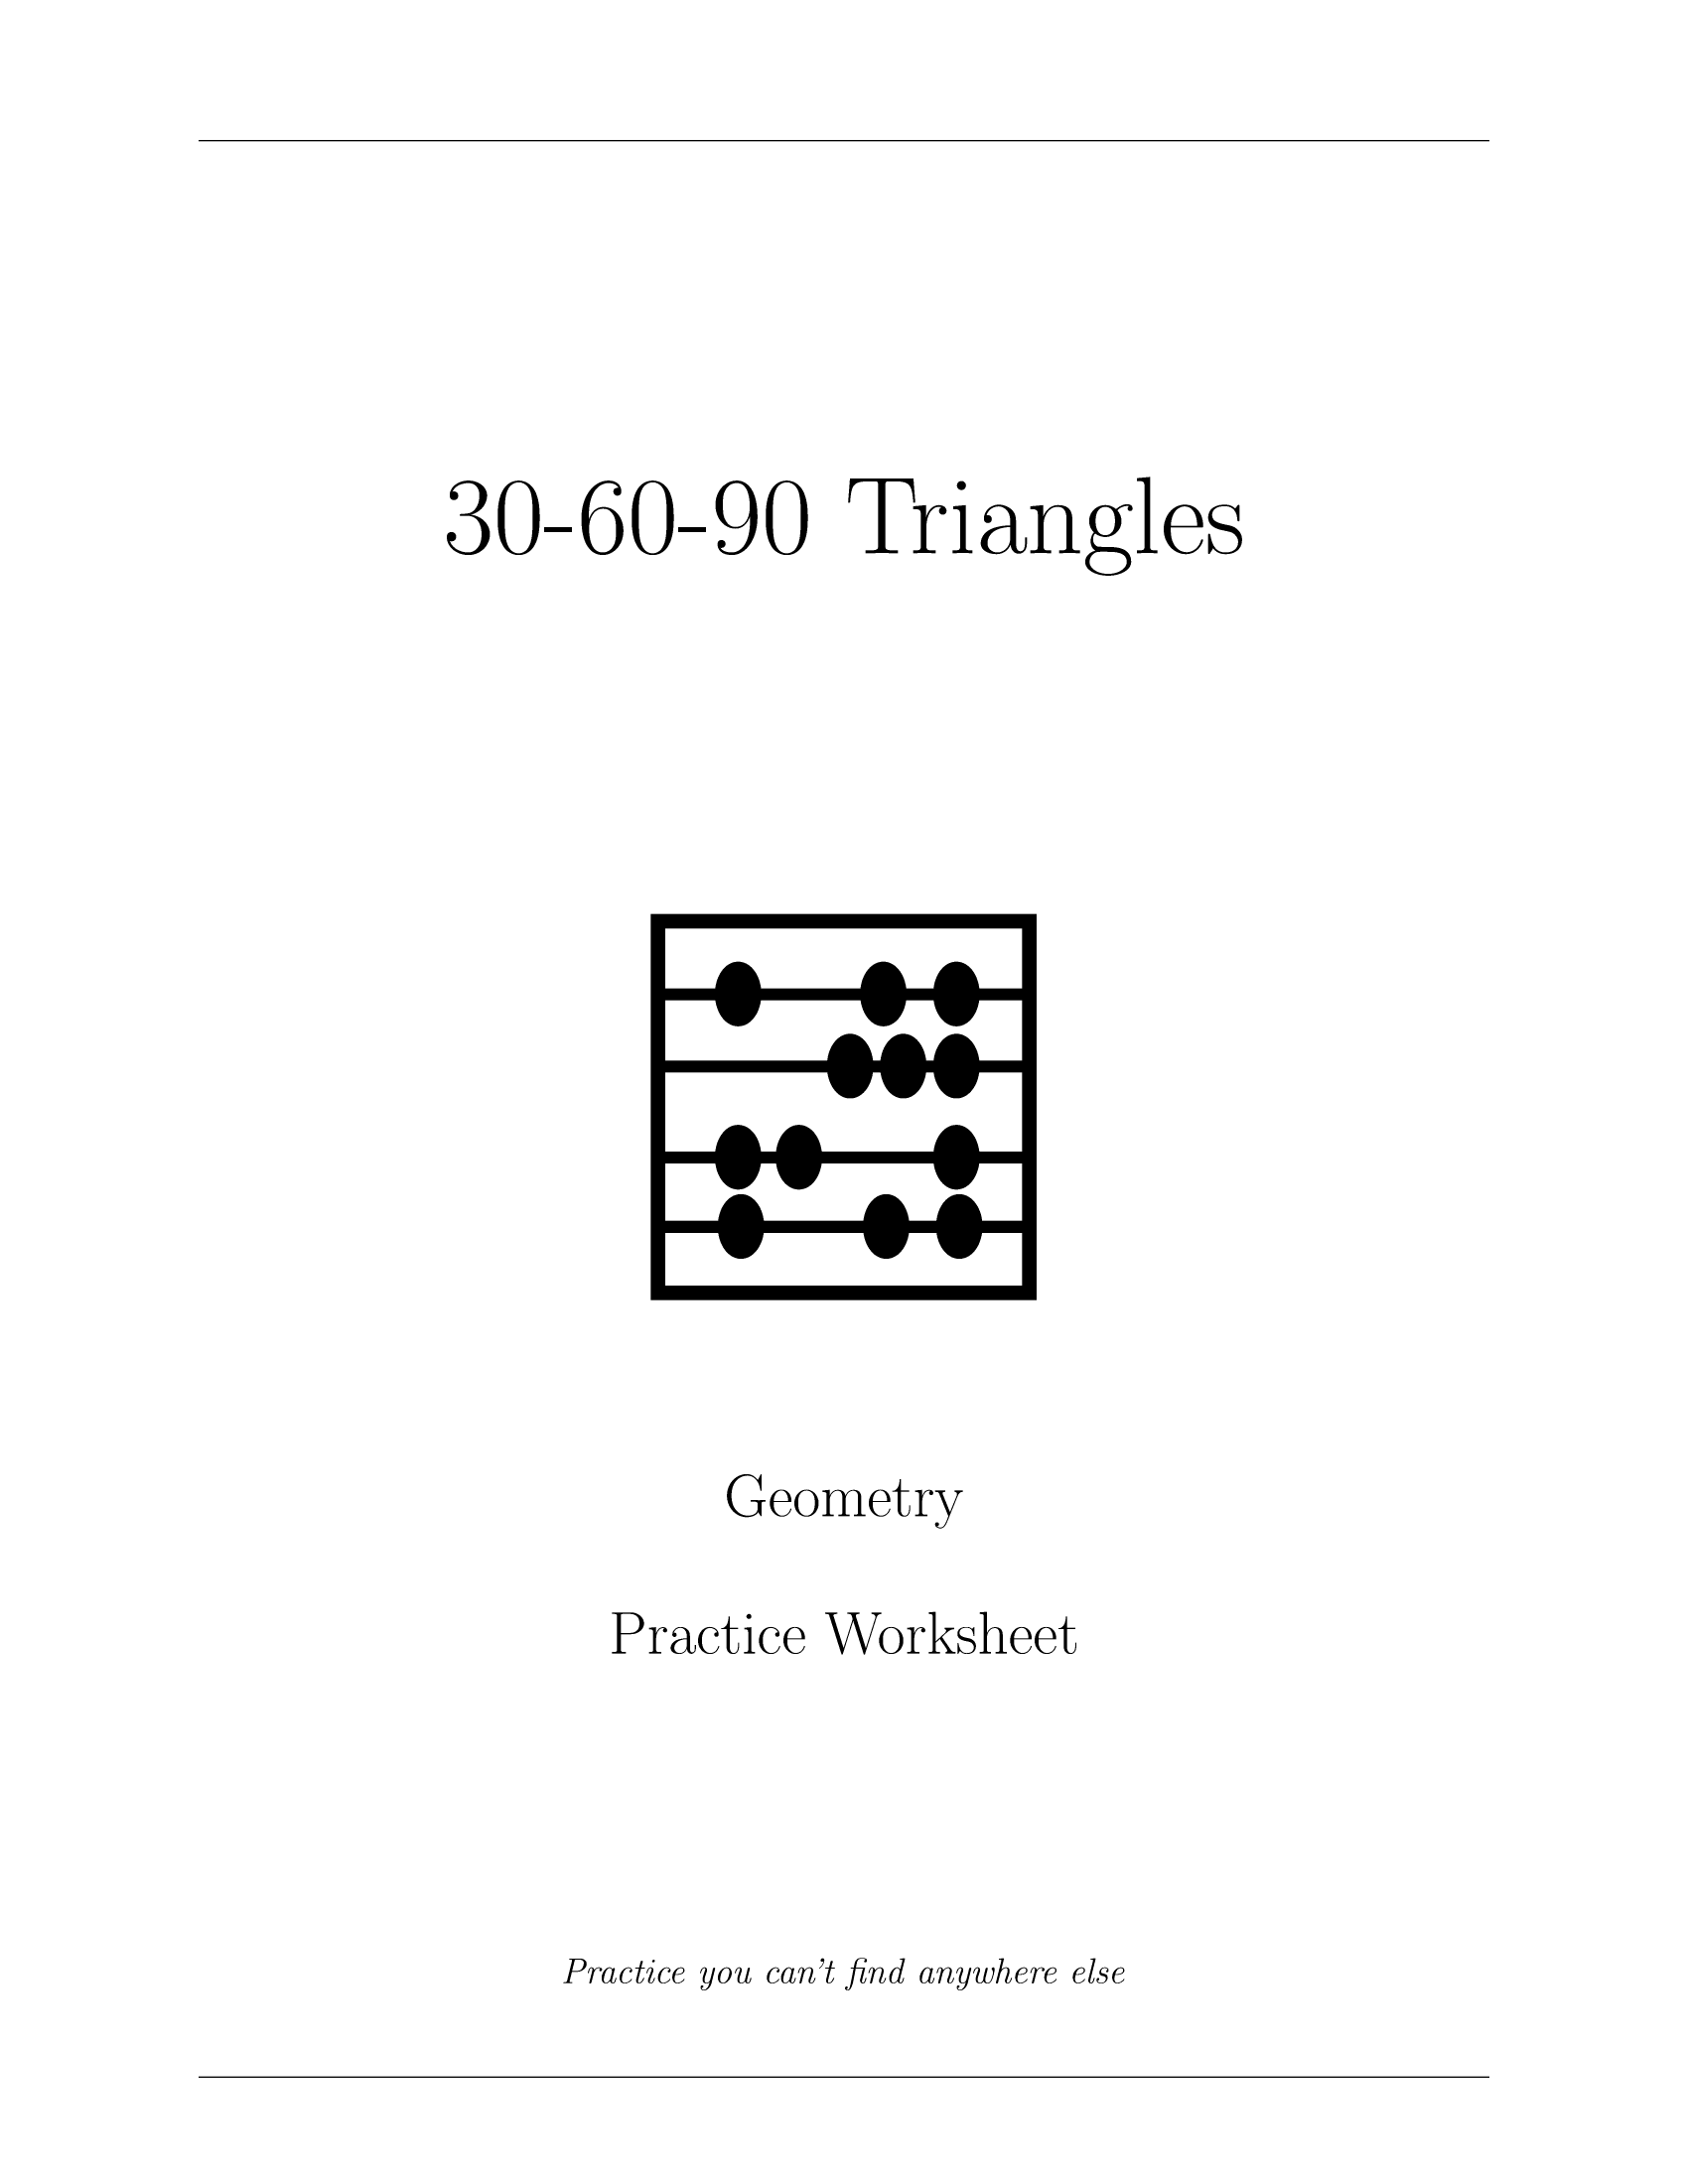 30-60-90 Triangles Worksheet_1